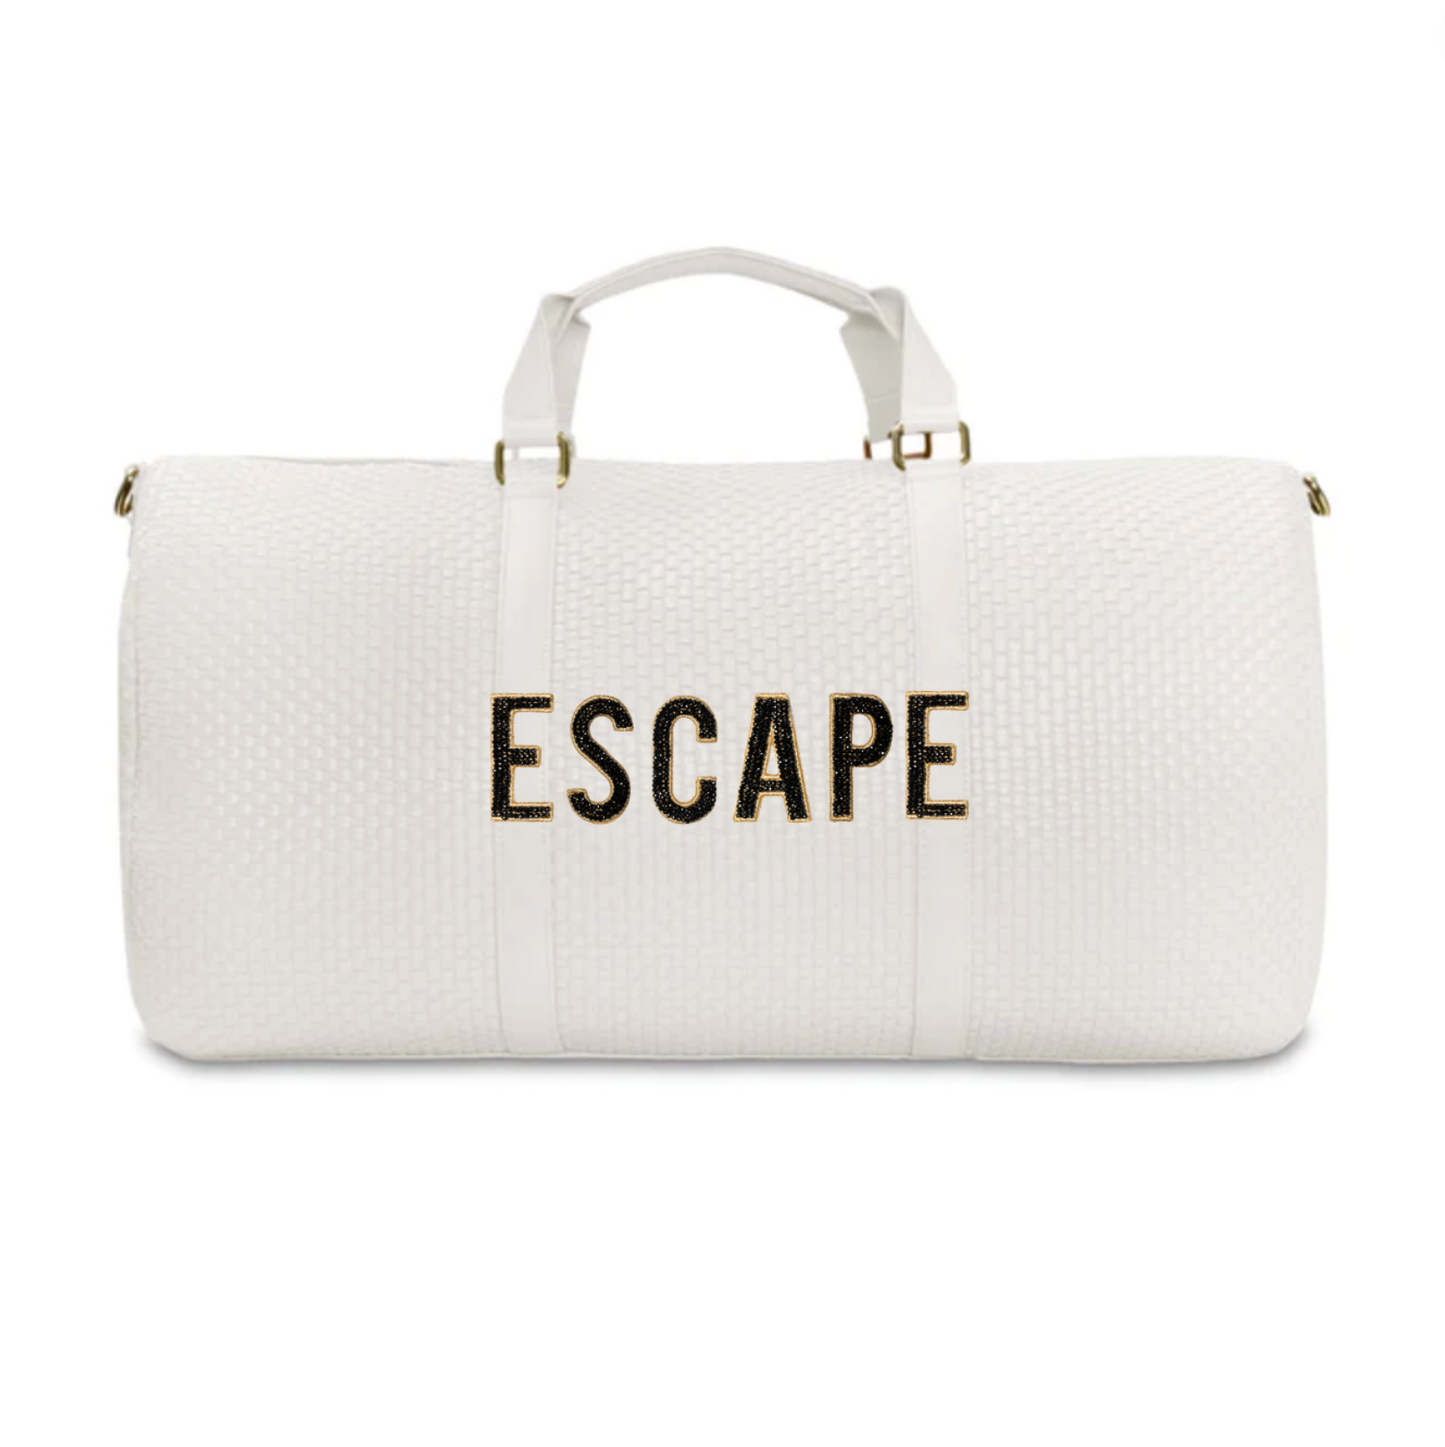 Escape Duffle Bag | Travel